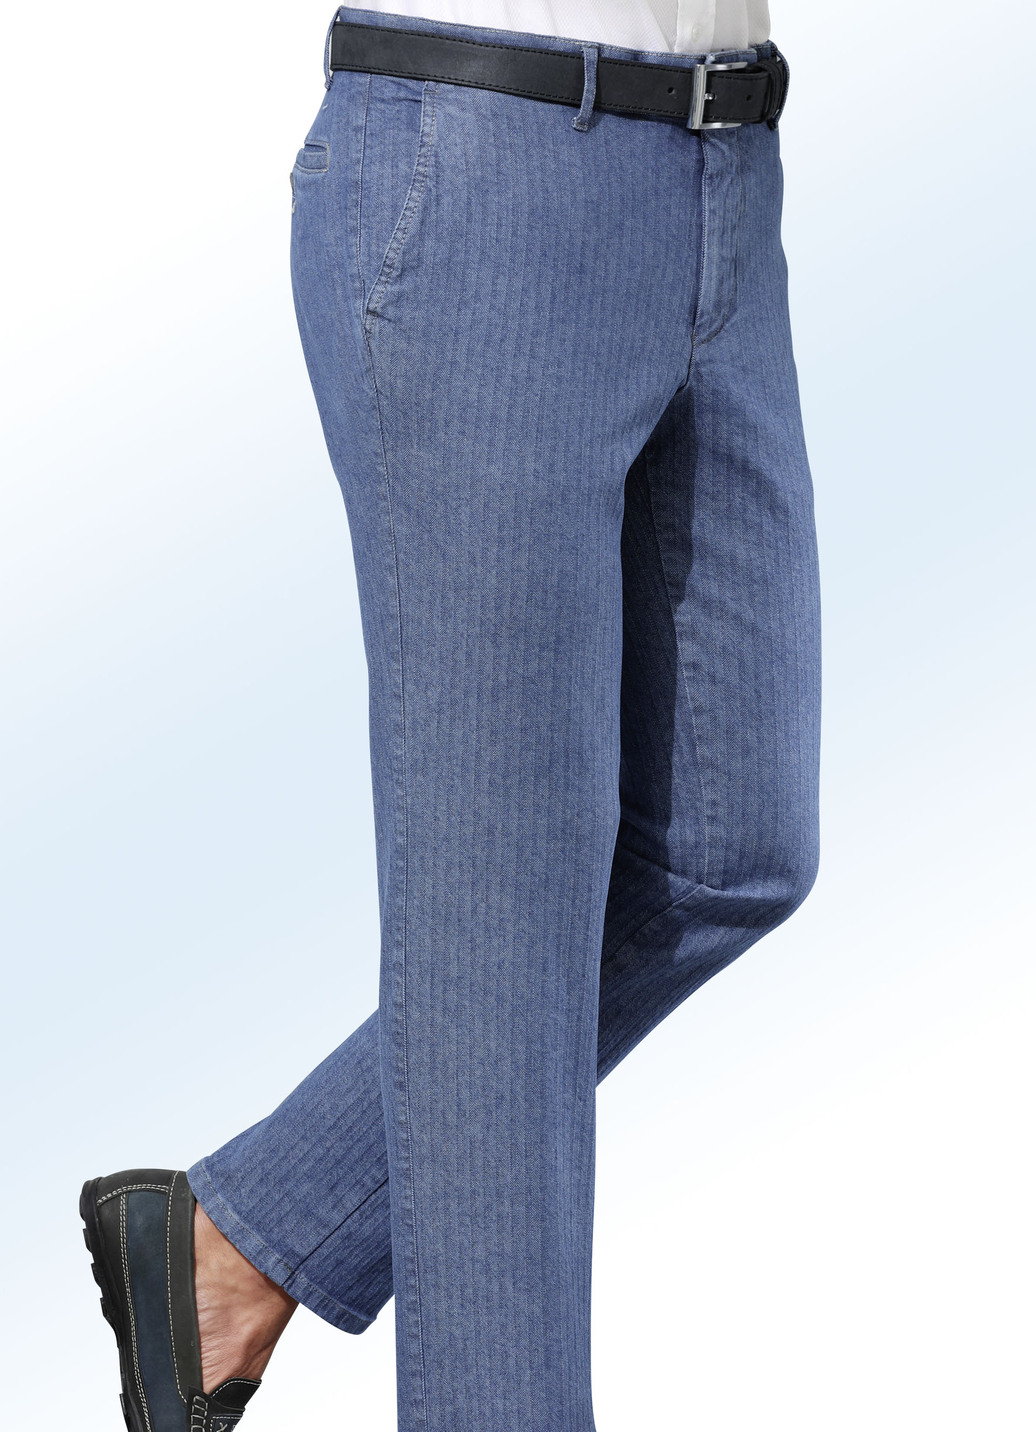 "Francesco Botti"-Jeans in 3 Farben, Hellblau, Größe 58 von FRANCESCO BOTTI